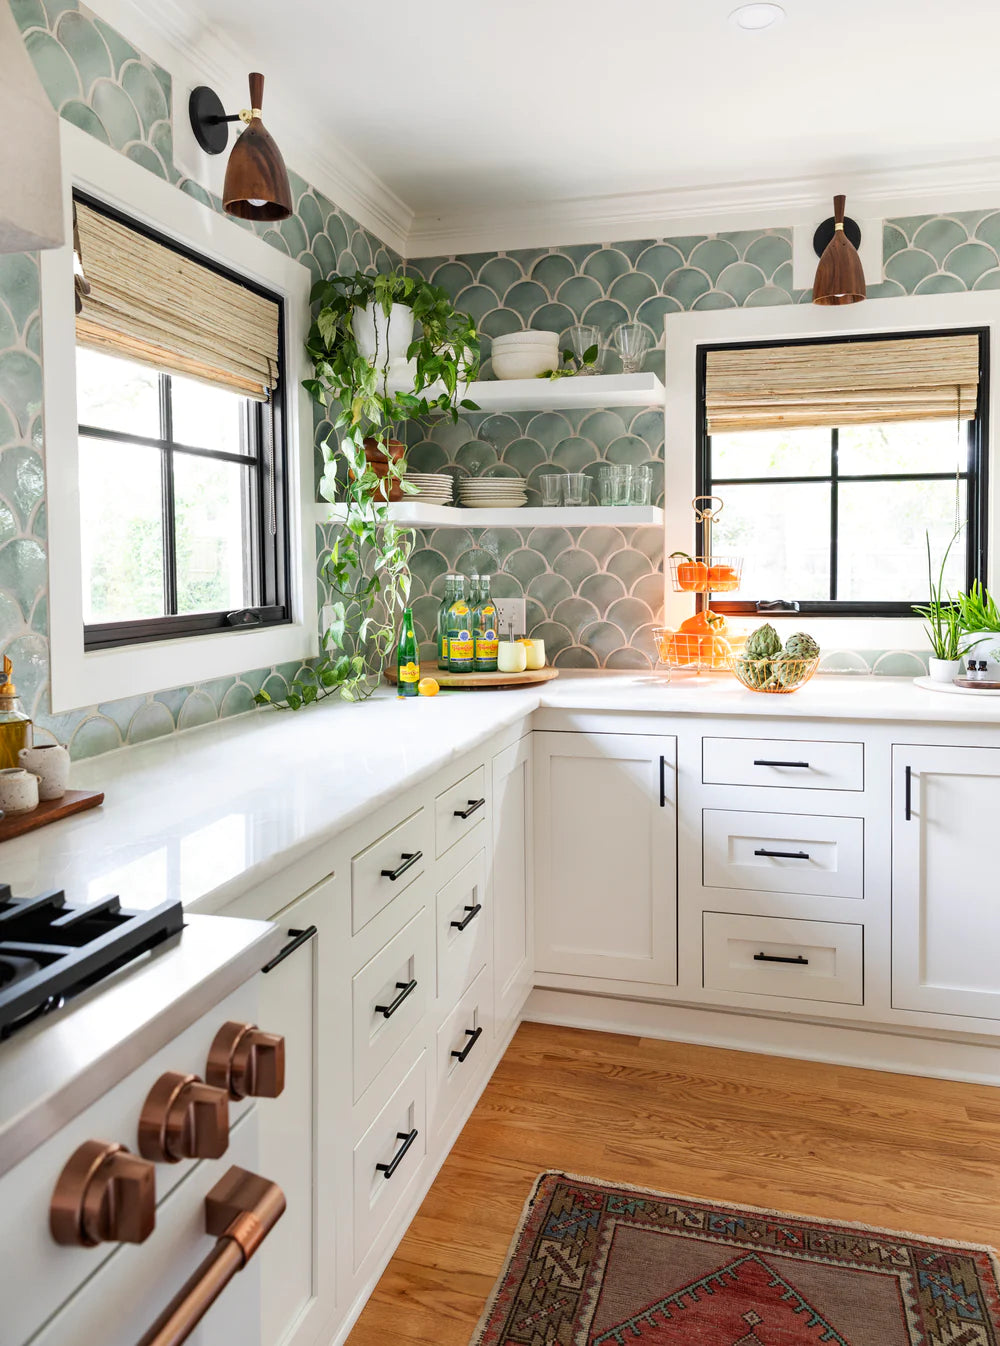 Kitchen backsplash with green tiles